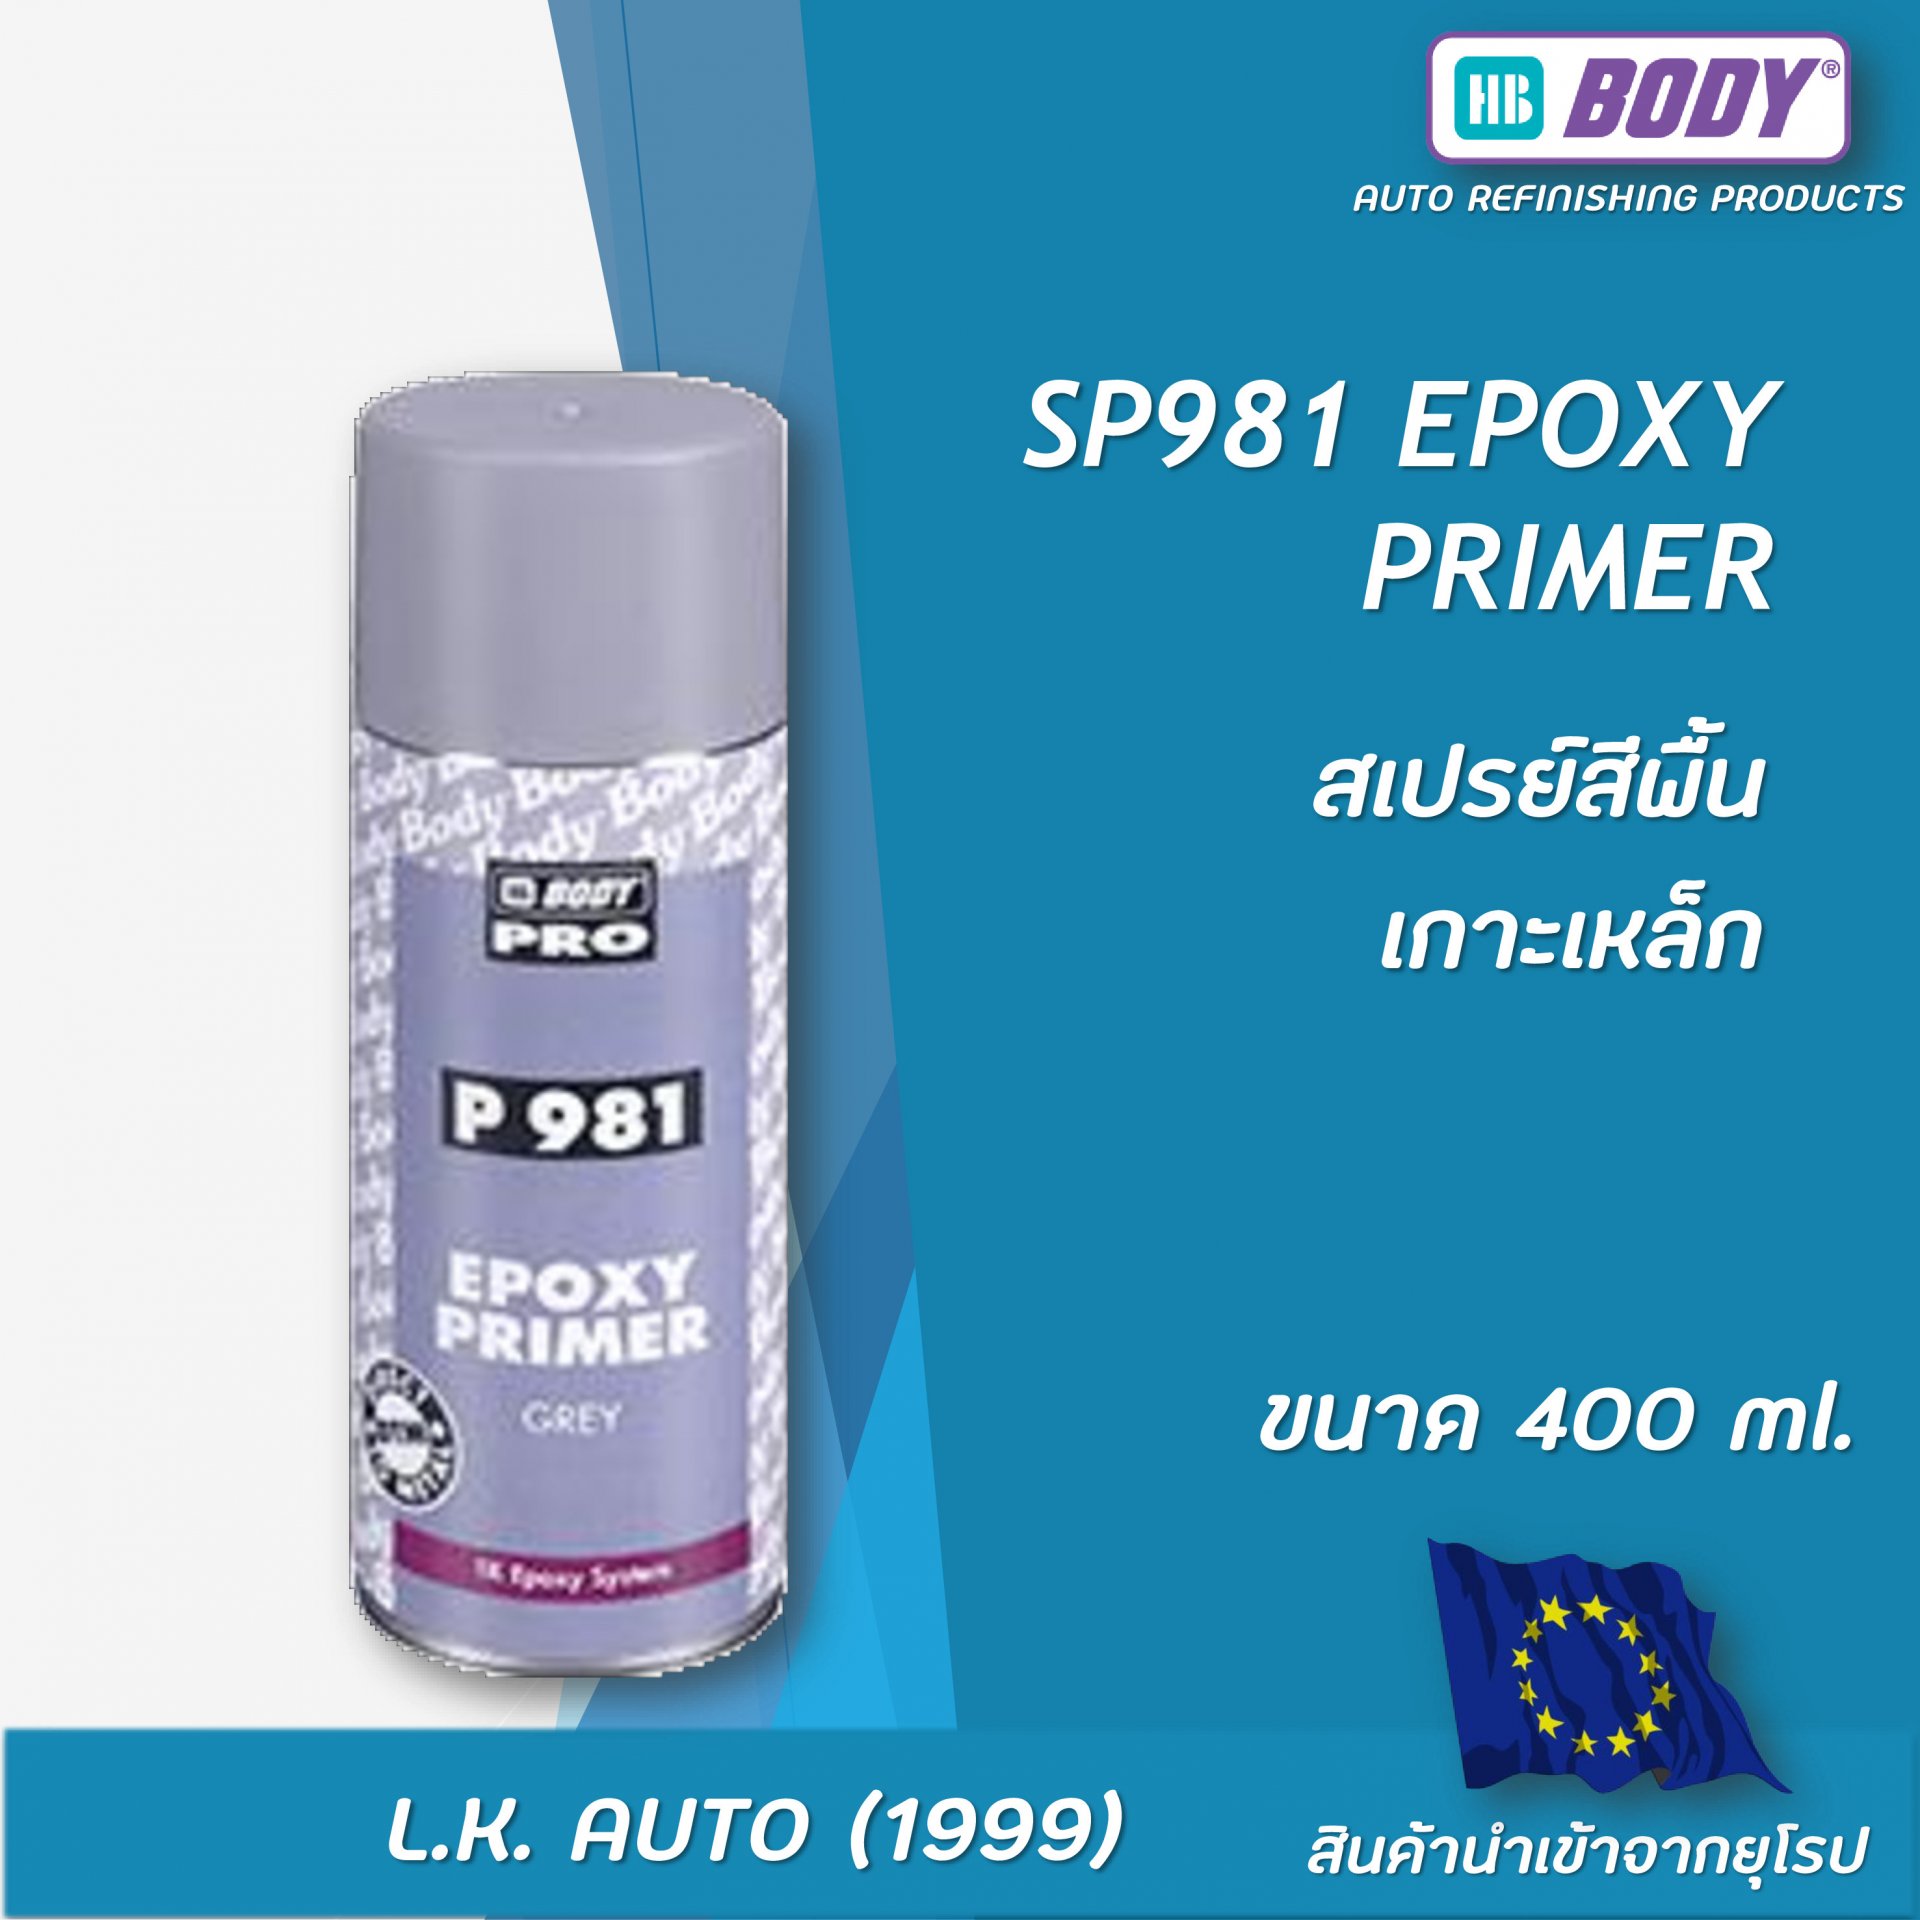 P981 EPOXY PRIMER